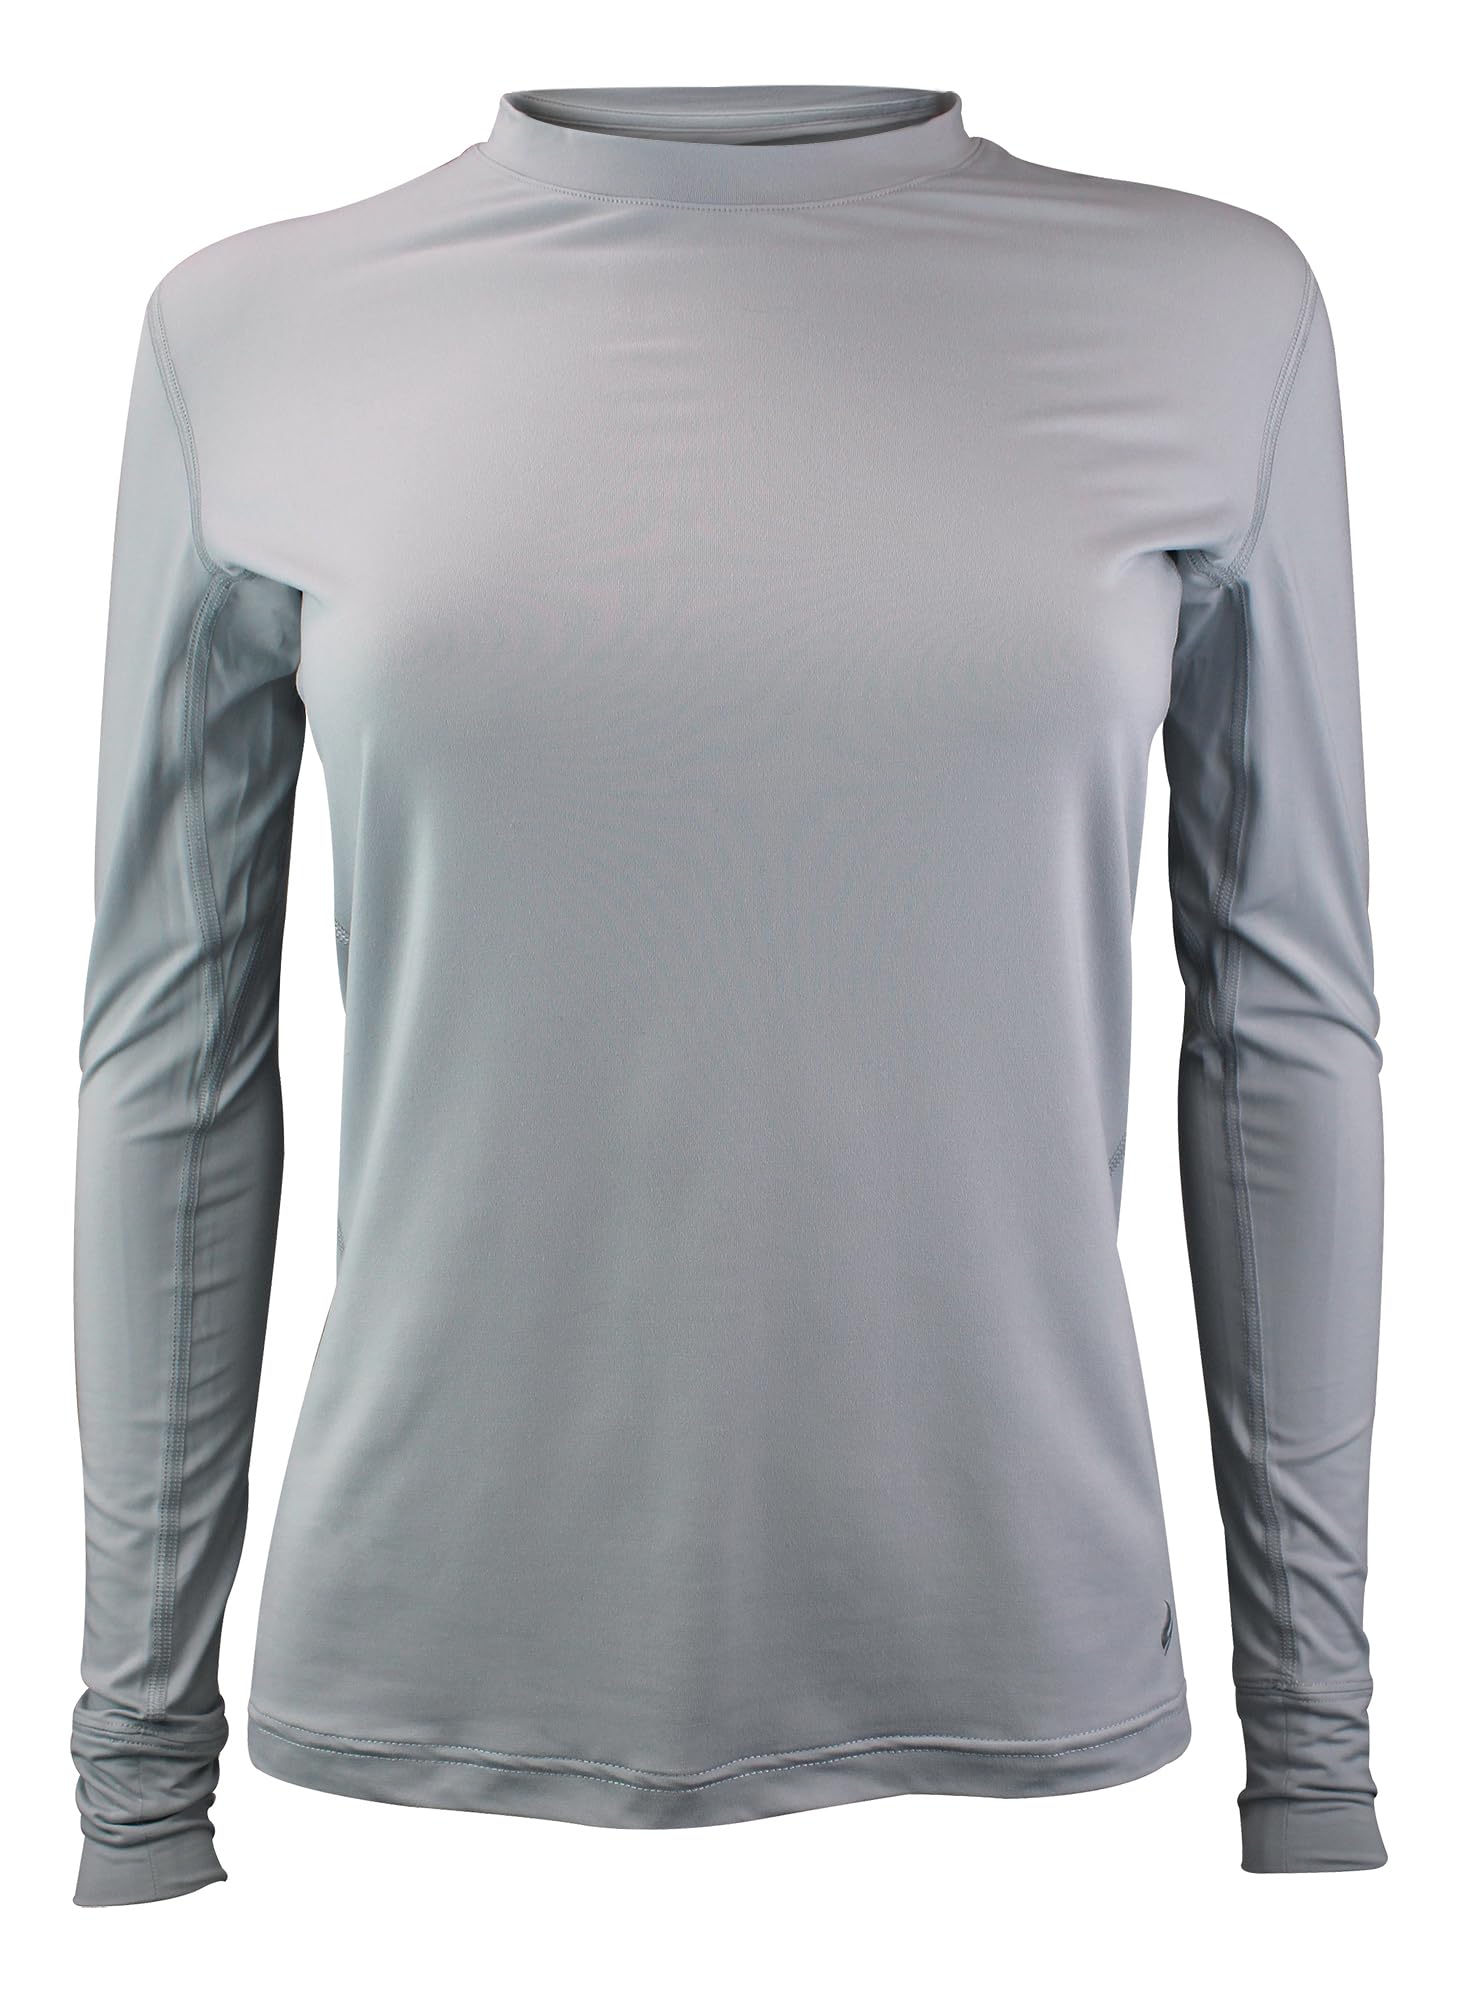 HEAT HOLDERS Damen Thermo T Shirt Langarm Innenfleece Unterziehshirt Winter, Outdoor Warm Unterhemd (L, Grau)